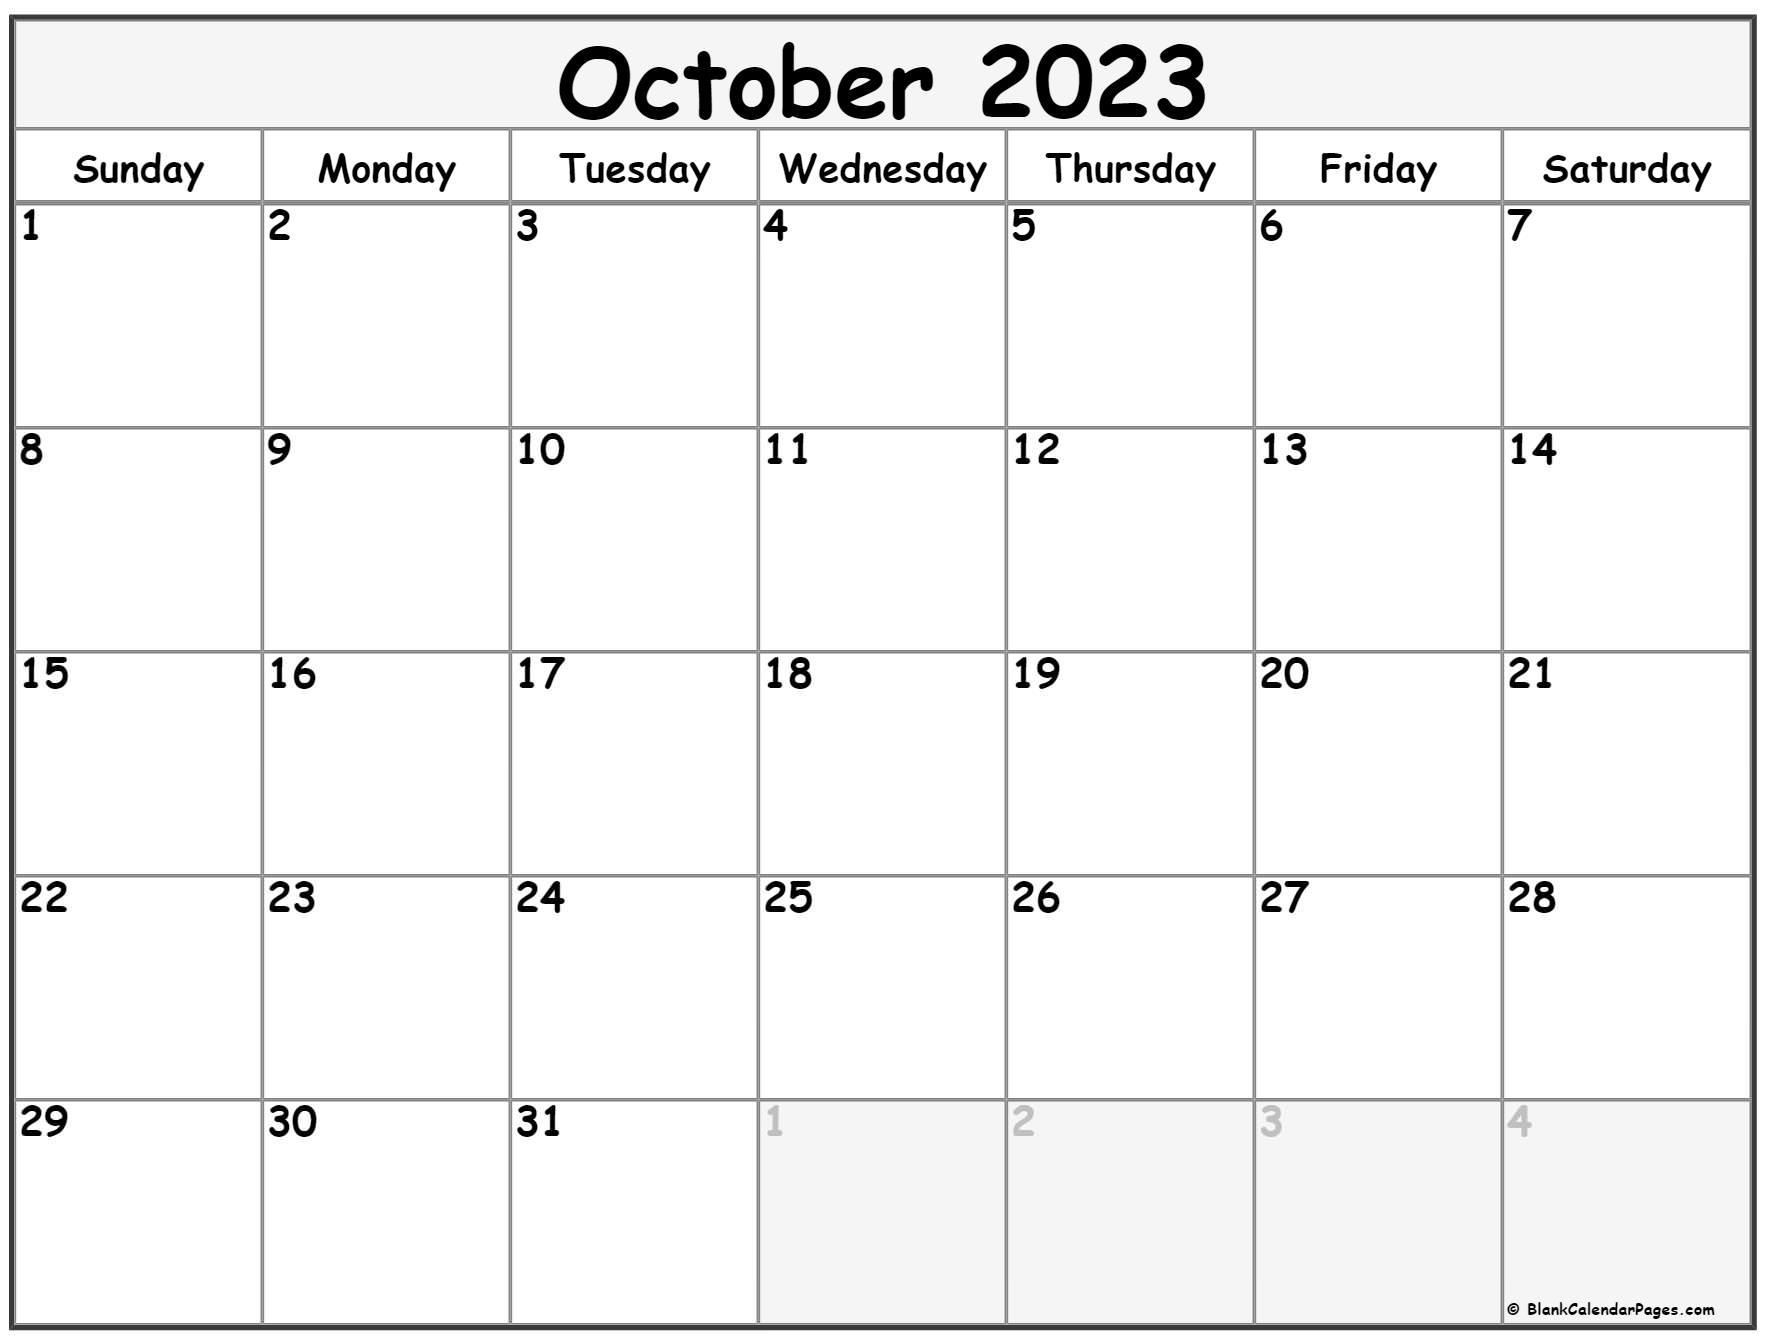 October 2023 calendar